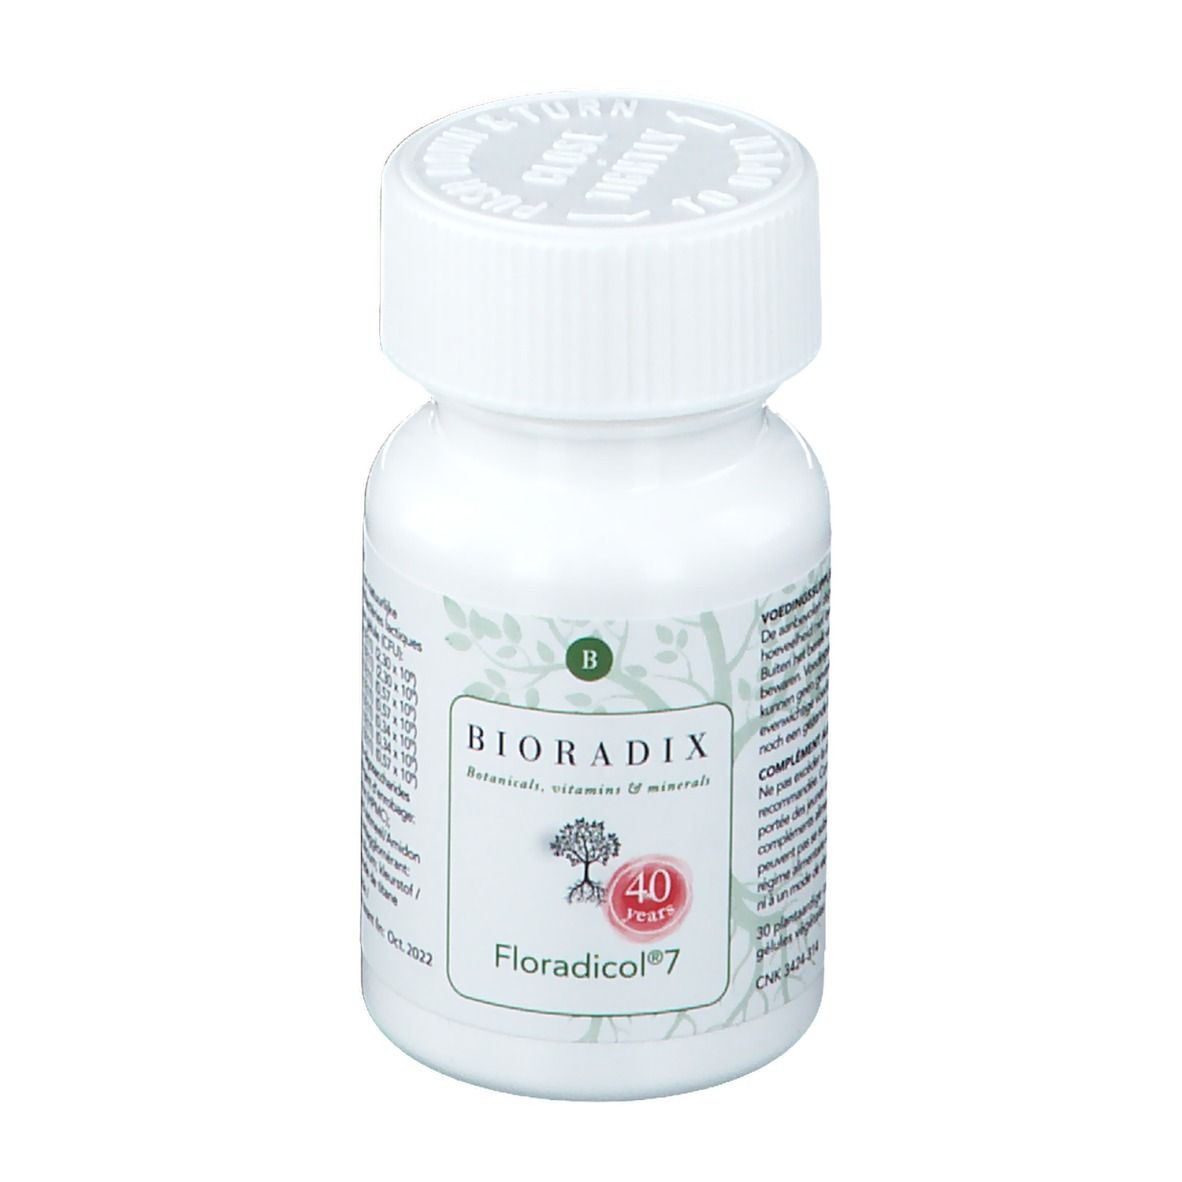 Bioradix Floradicol7